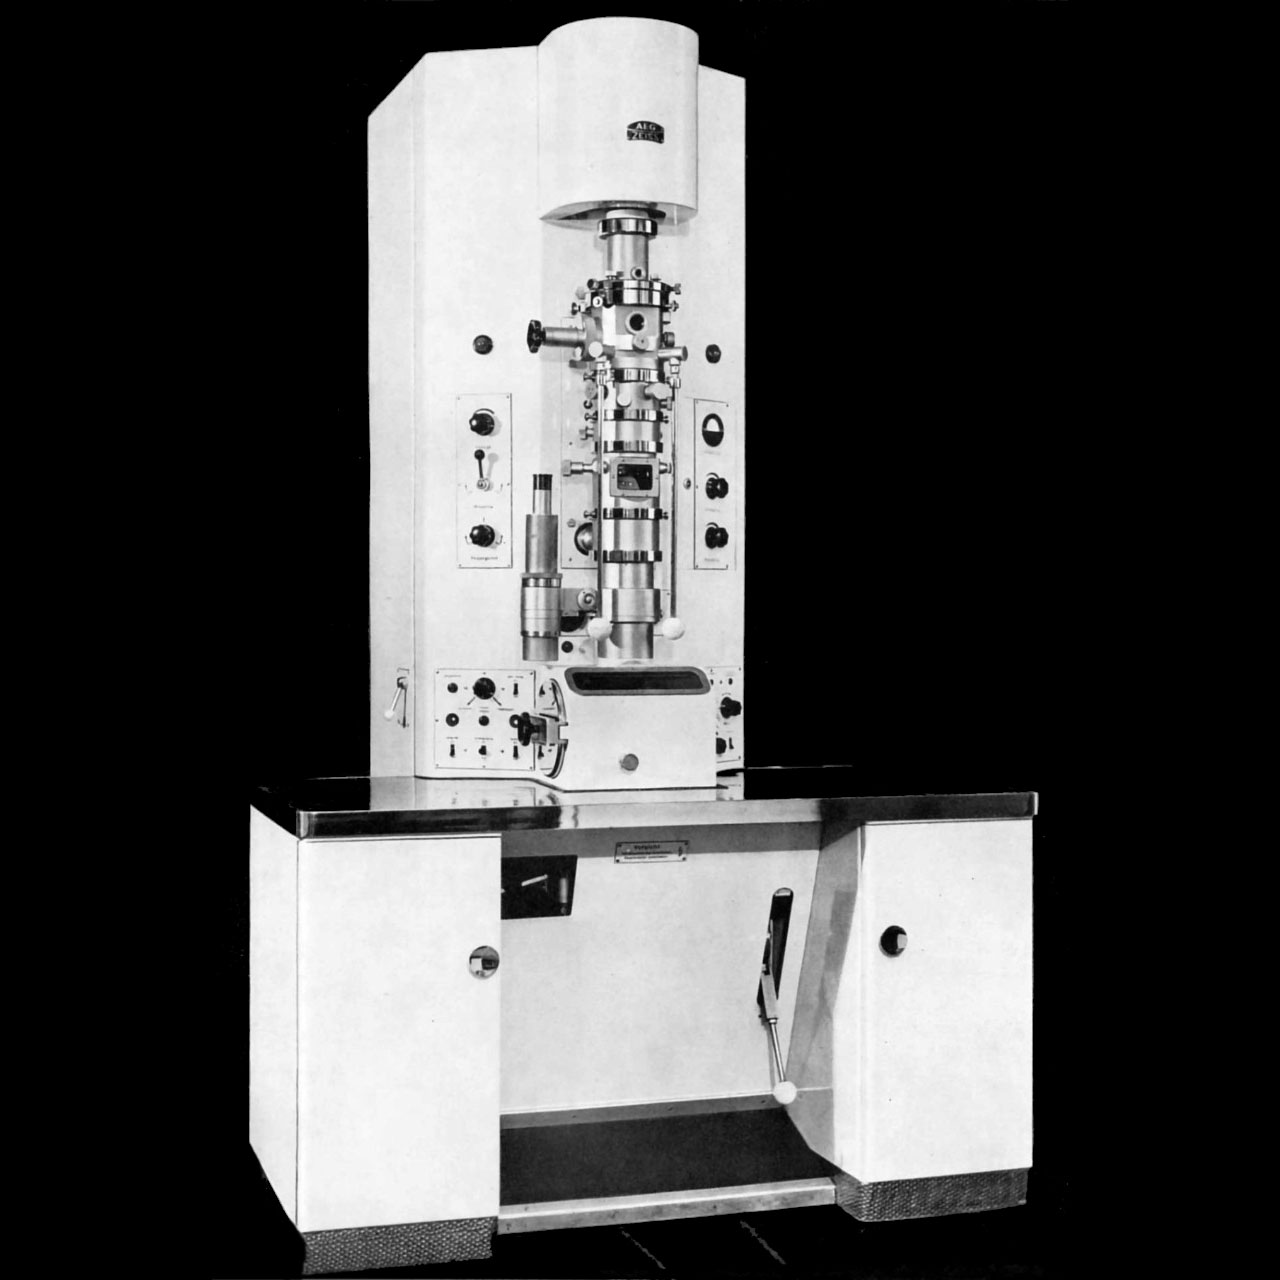 1949 – Elektrostatisches AEG-ZEISS Transmissions-Elektronenmikroskop EM 8.